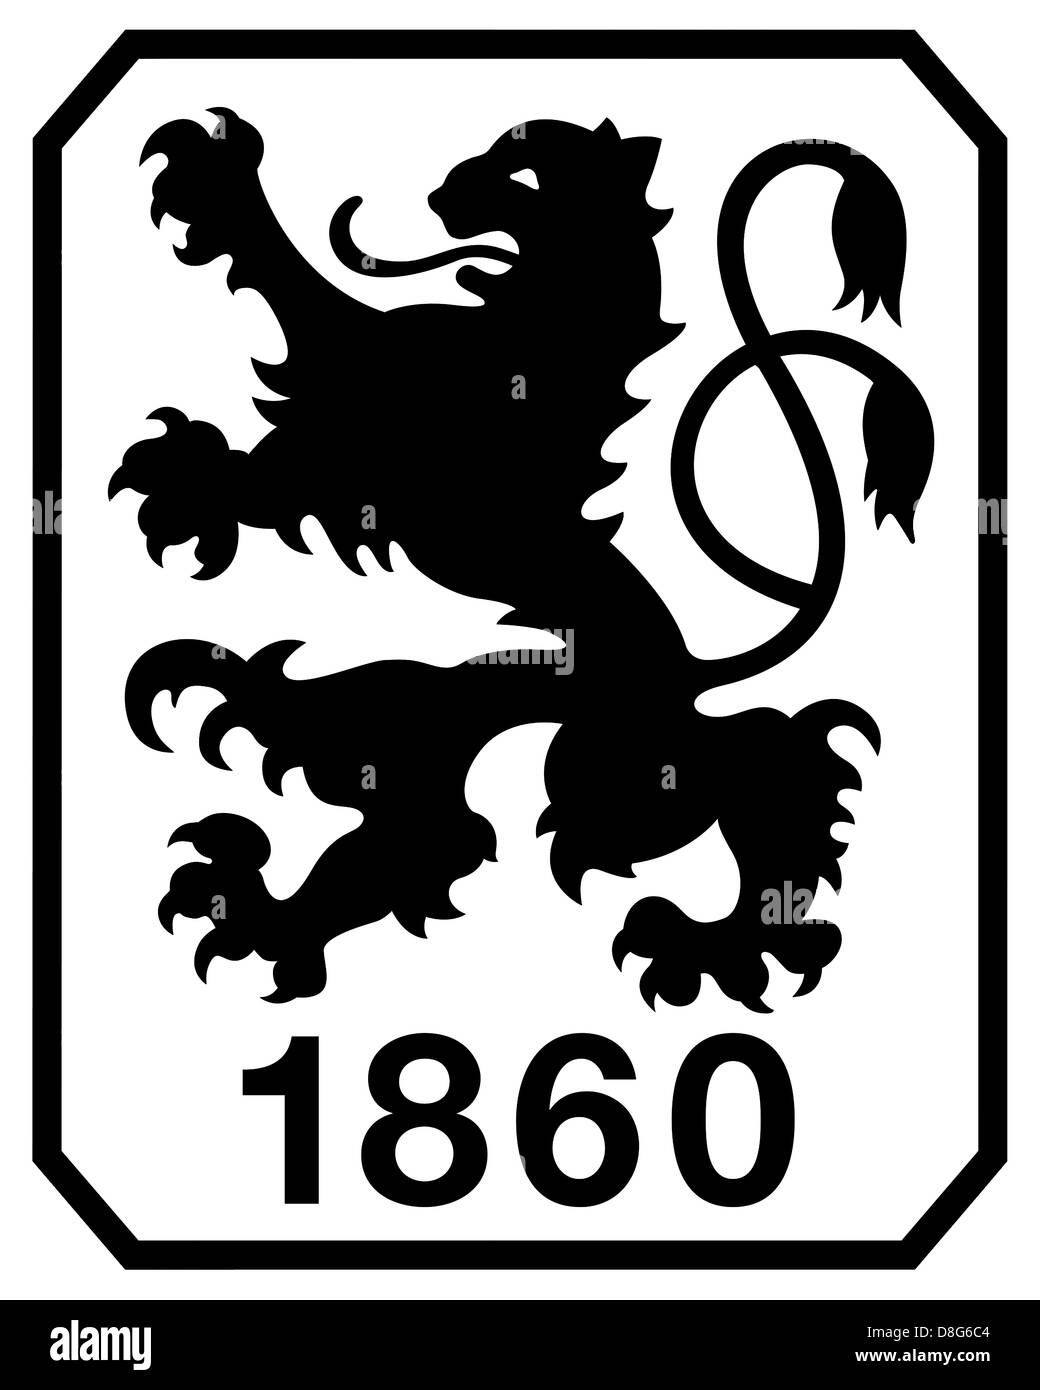 Logo of German football team TSV 1860 Munich. Stock Photo